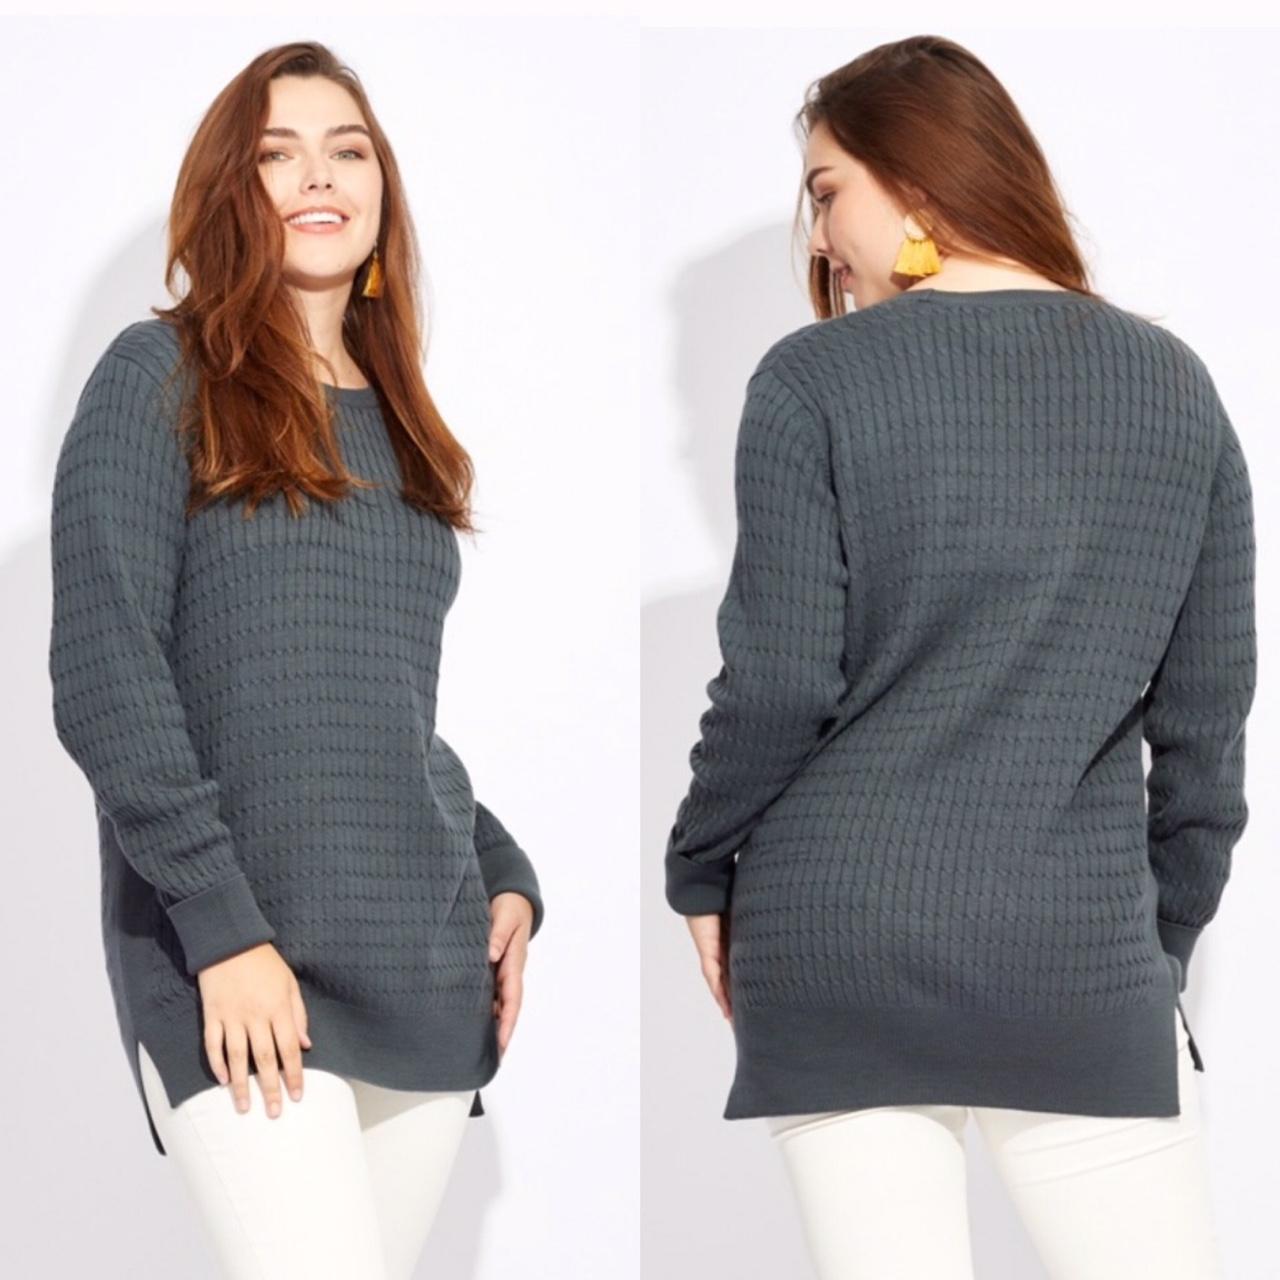 Pact Organic Cotton Sweater Tunic in Gray